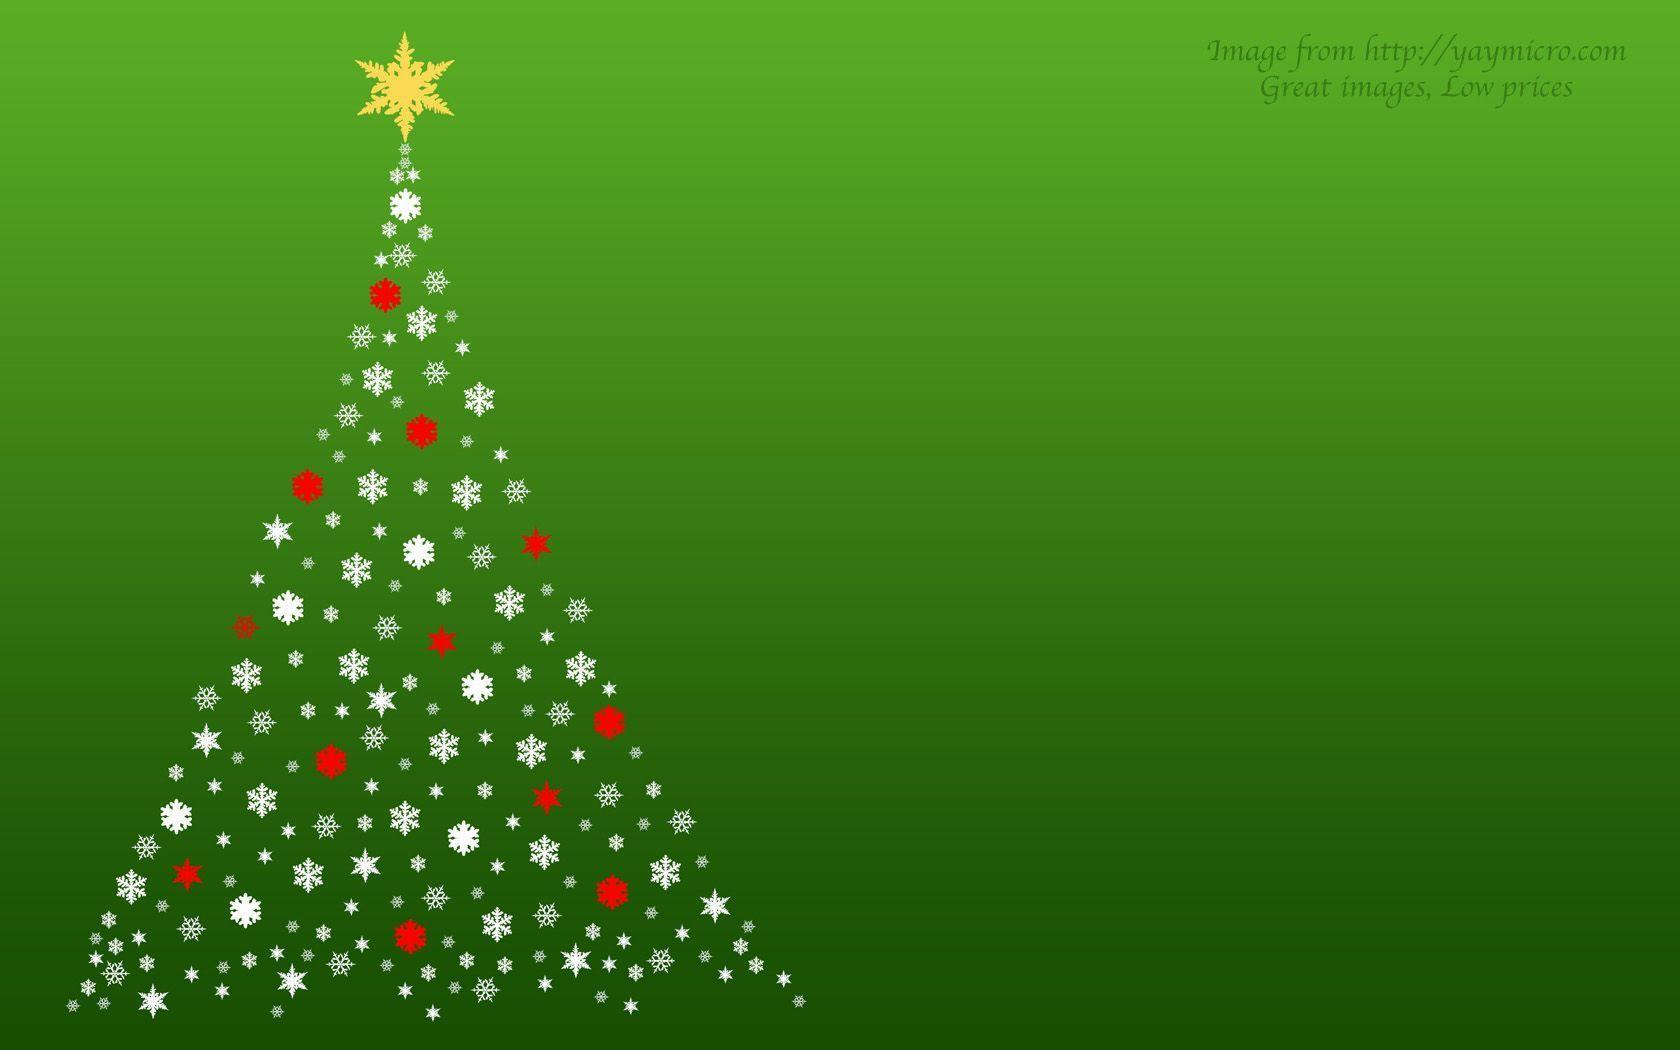 YAY Free Christmas Image Background Wallpaper